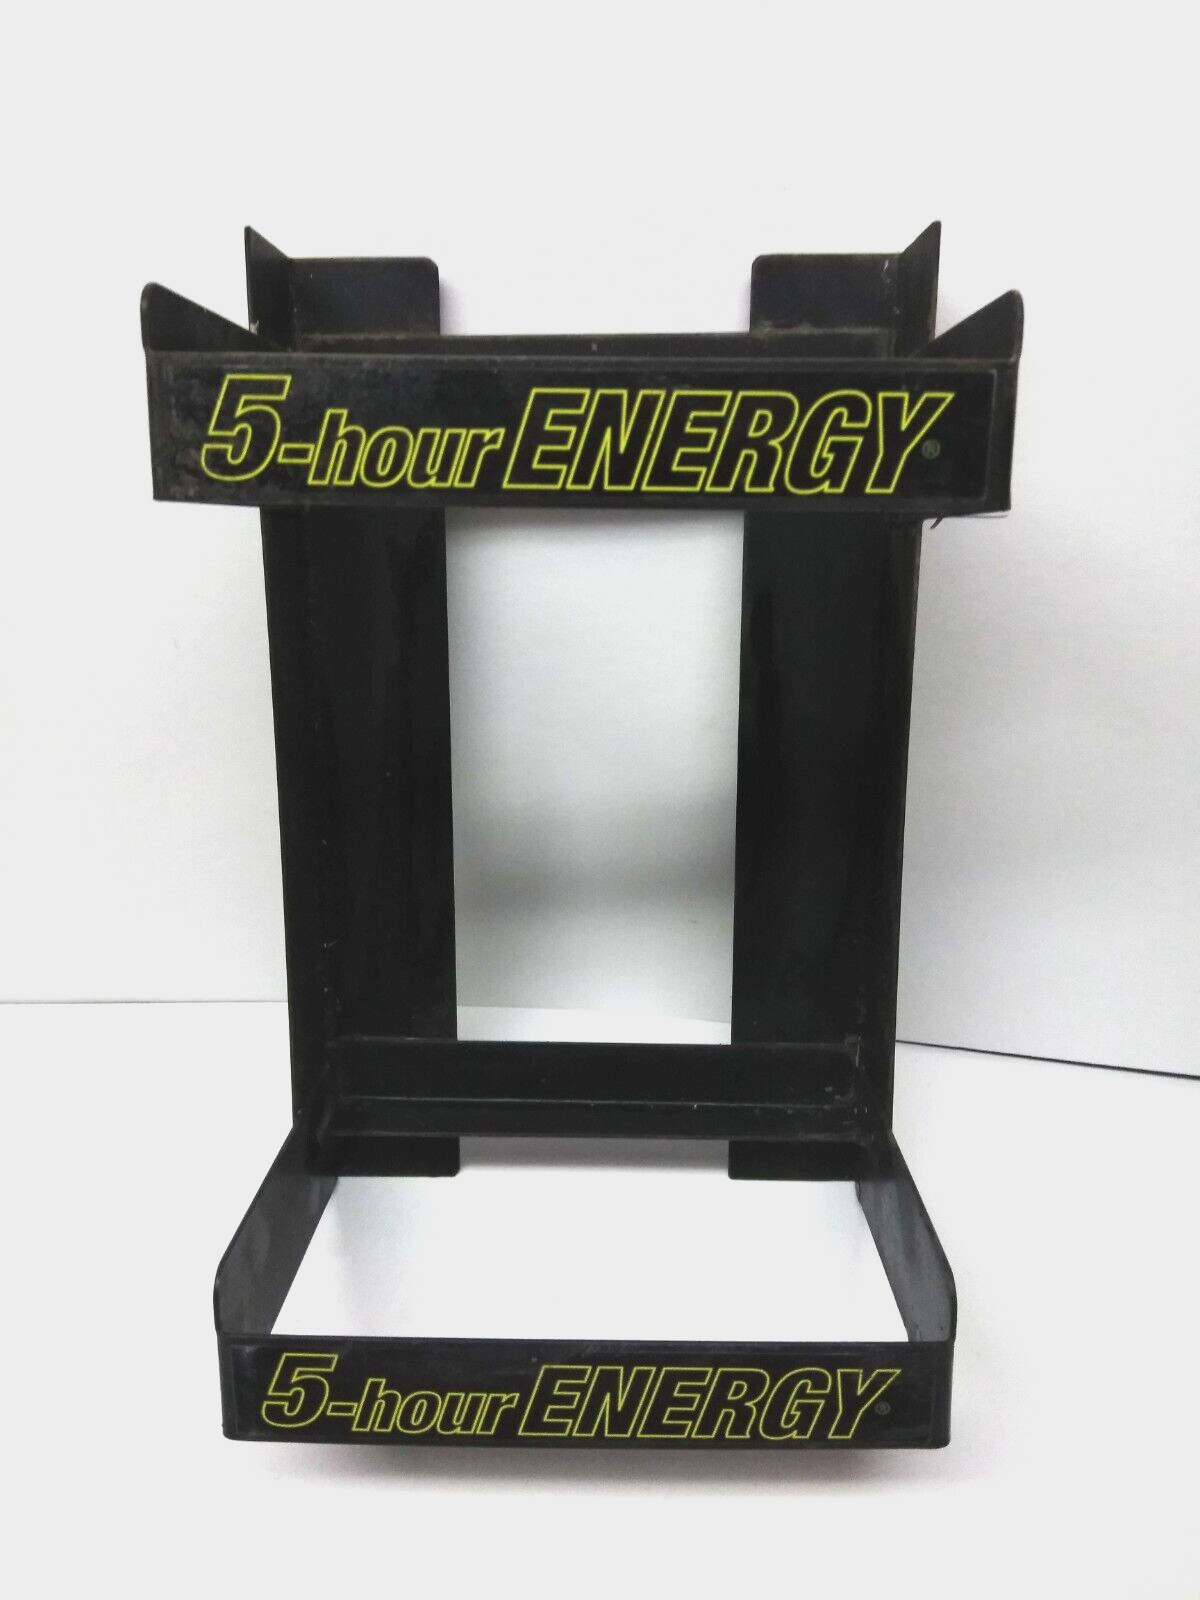 5 Hour Energy Vintage Original Store Display Metal Rack Dispenser Holder 10x6x4